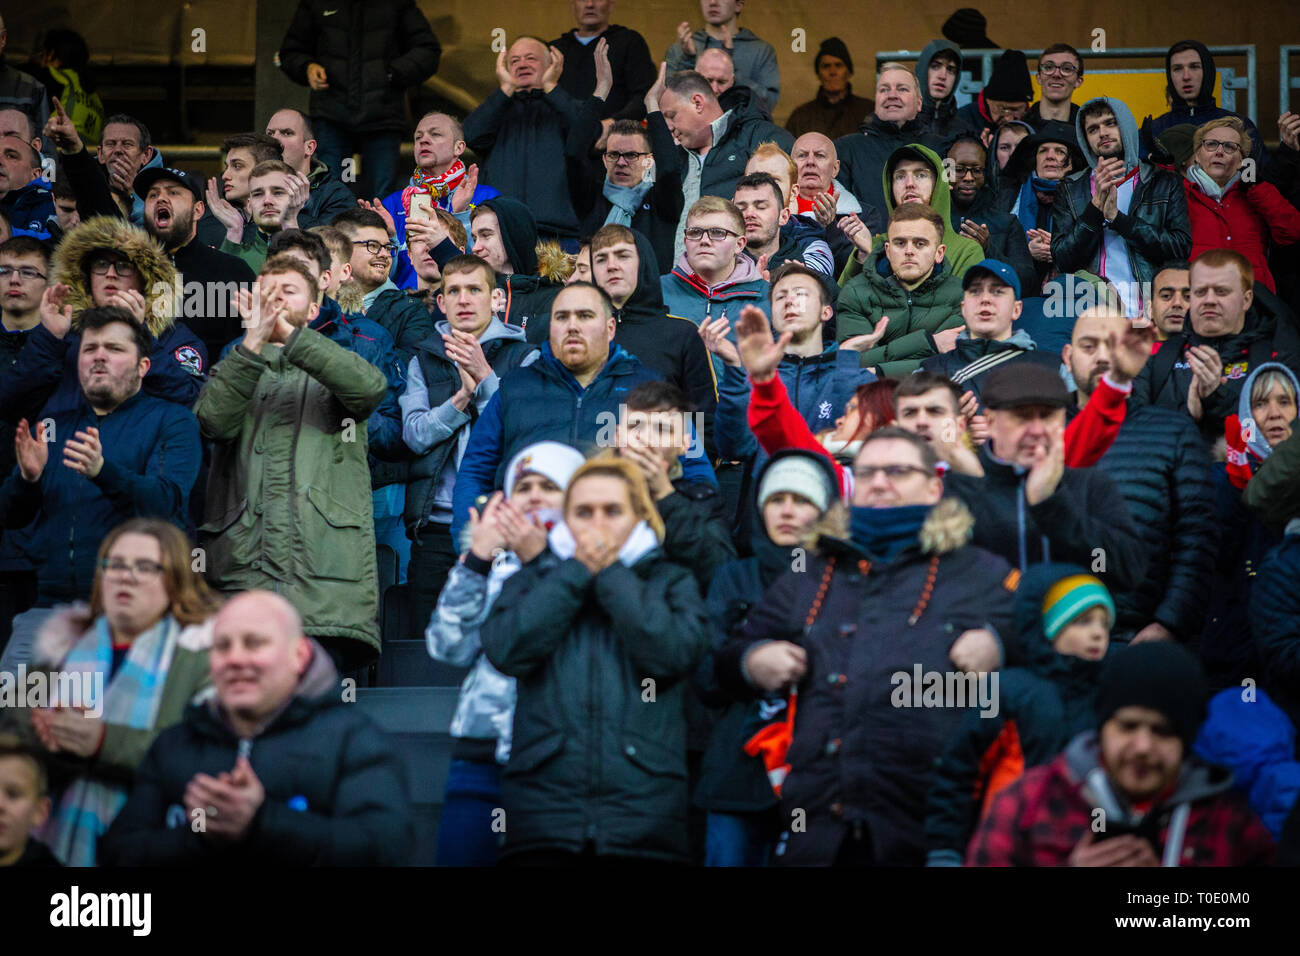 Football fans of English club watching match. Stock Photo